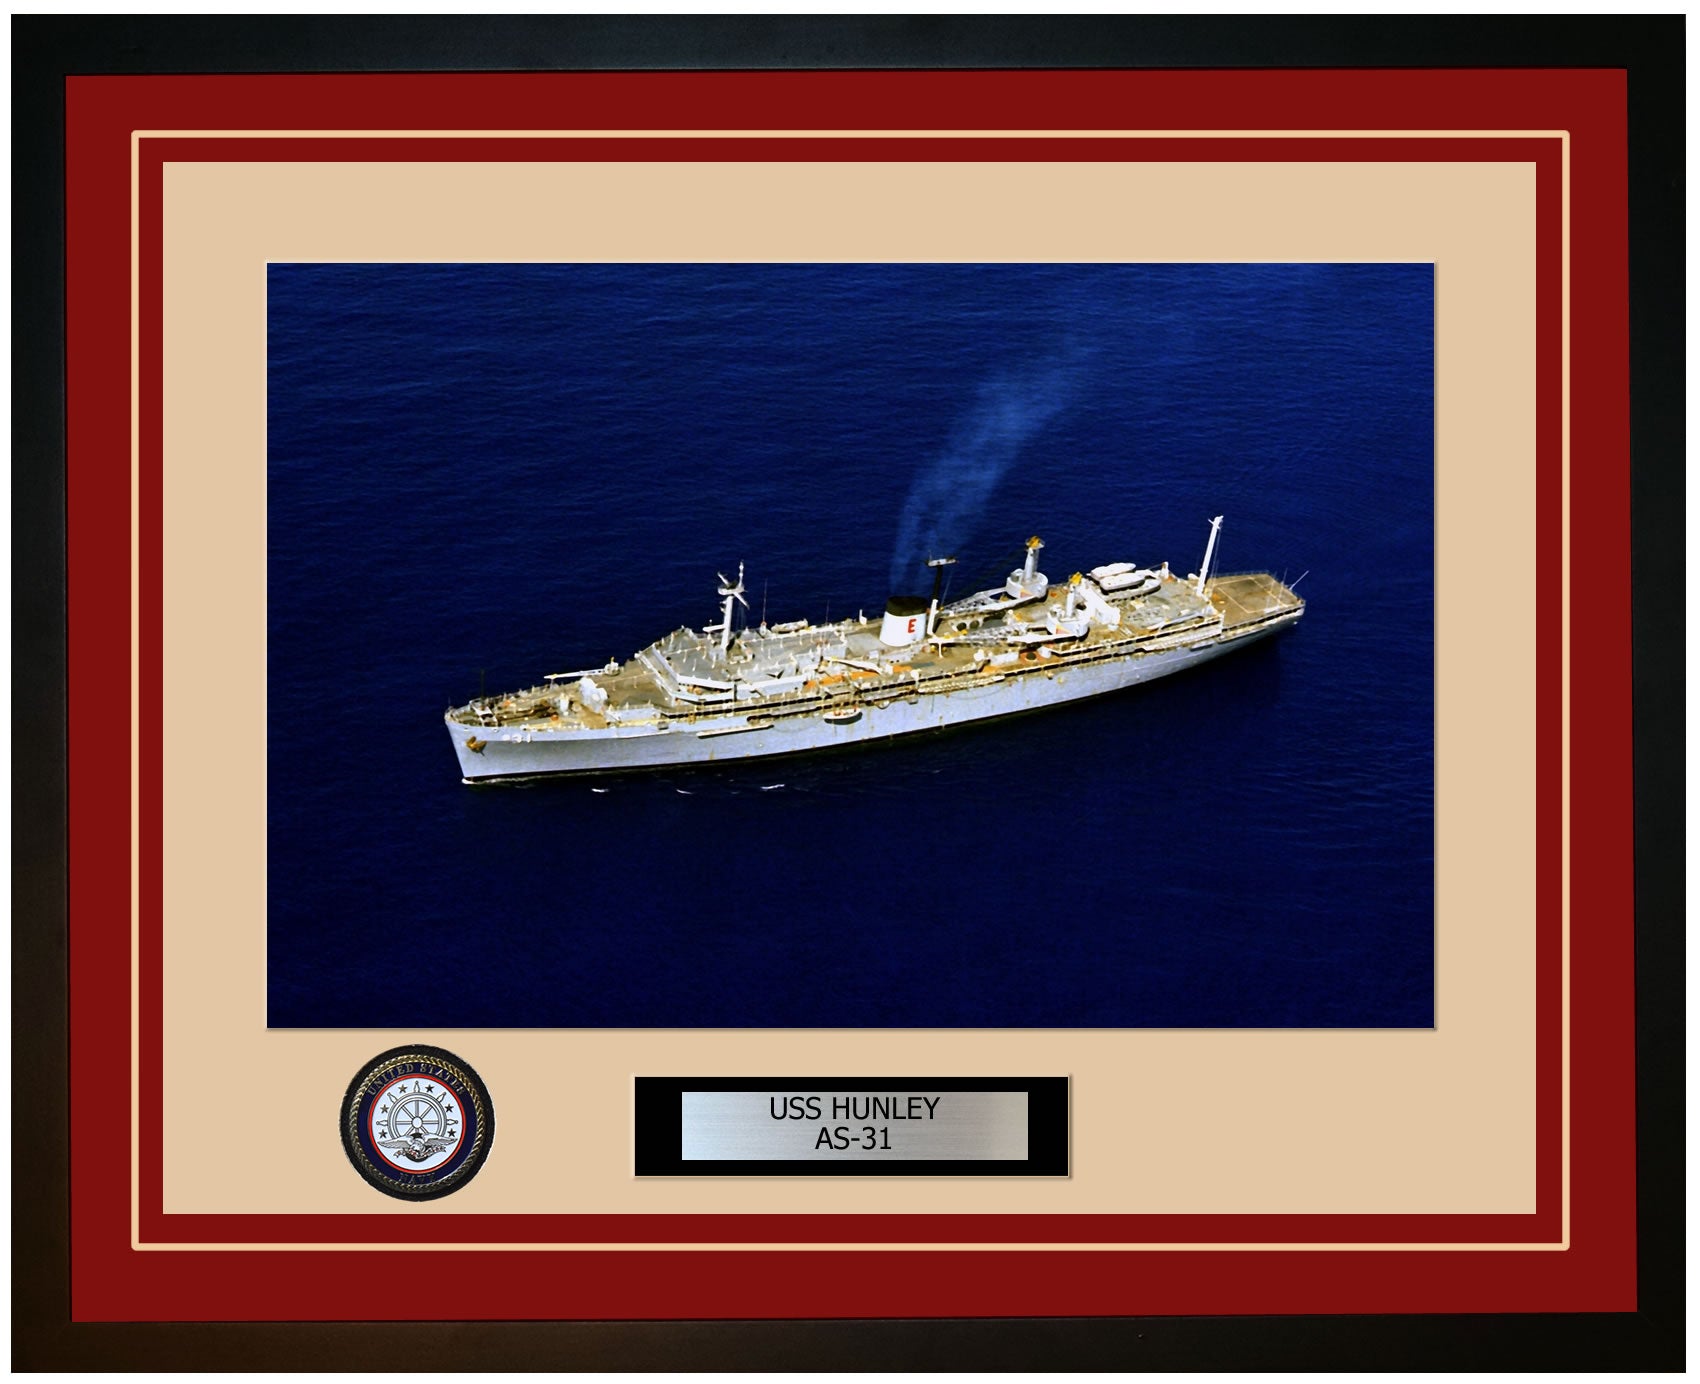 USS HUNLEY AS-31 Framed Navy Ship Photo Burgundy